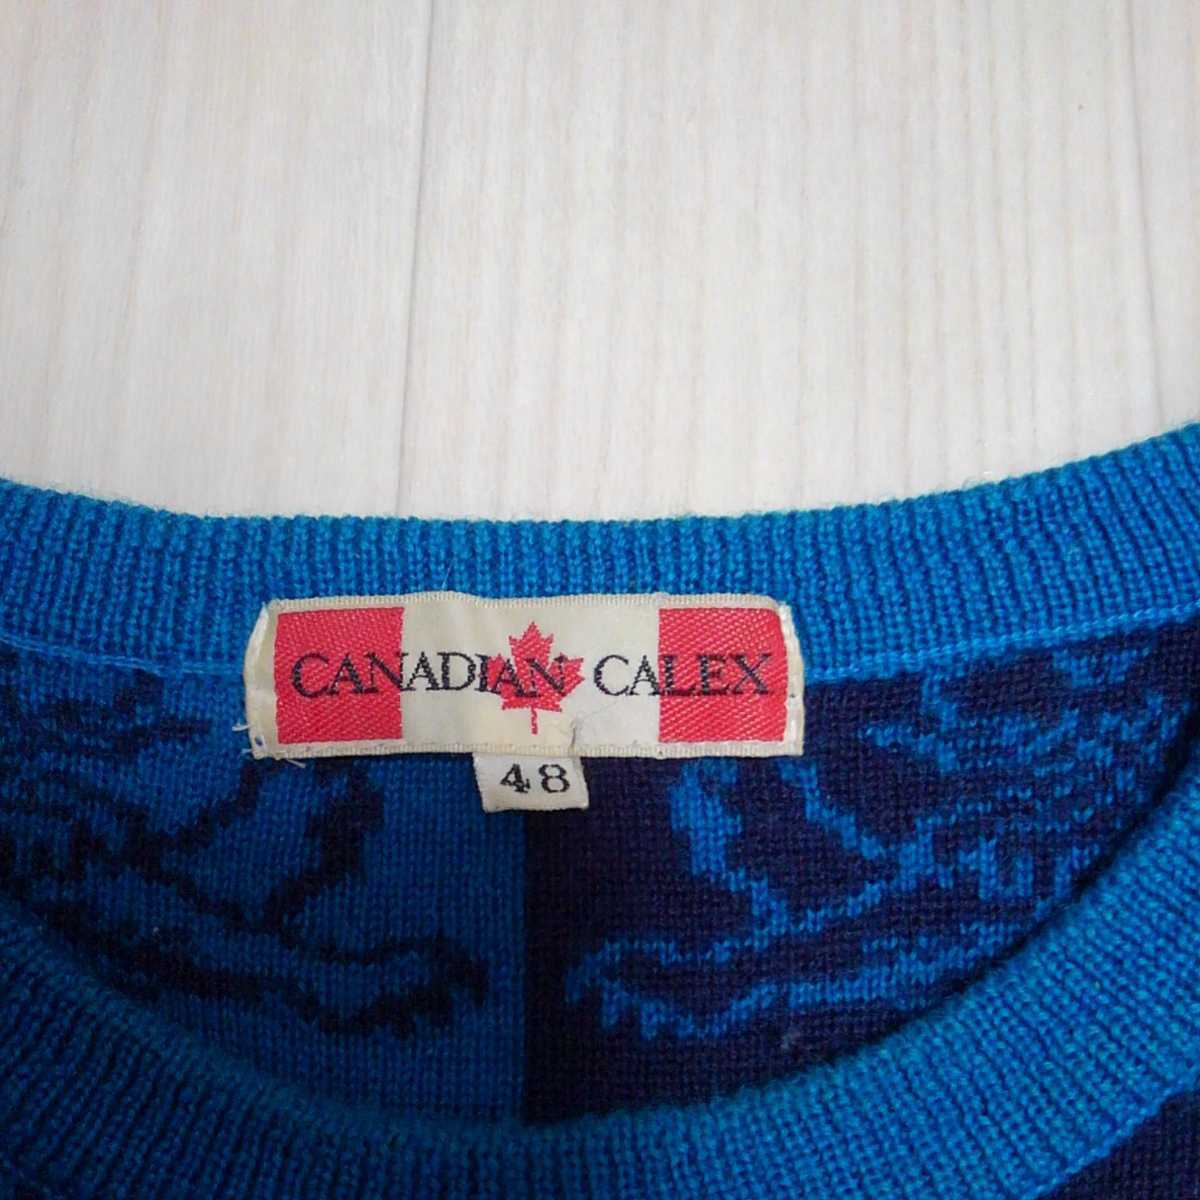 CANADIAN CALEX ニット セーター 紺青 格子柄 日本製 ビンテージ K20F95_画像7